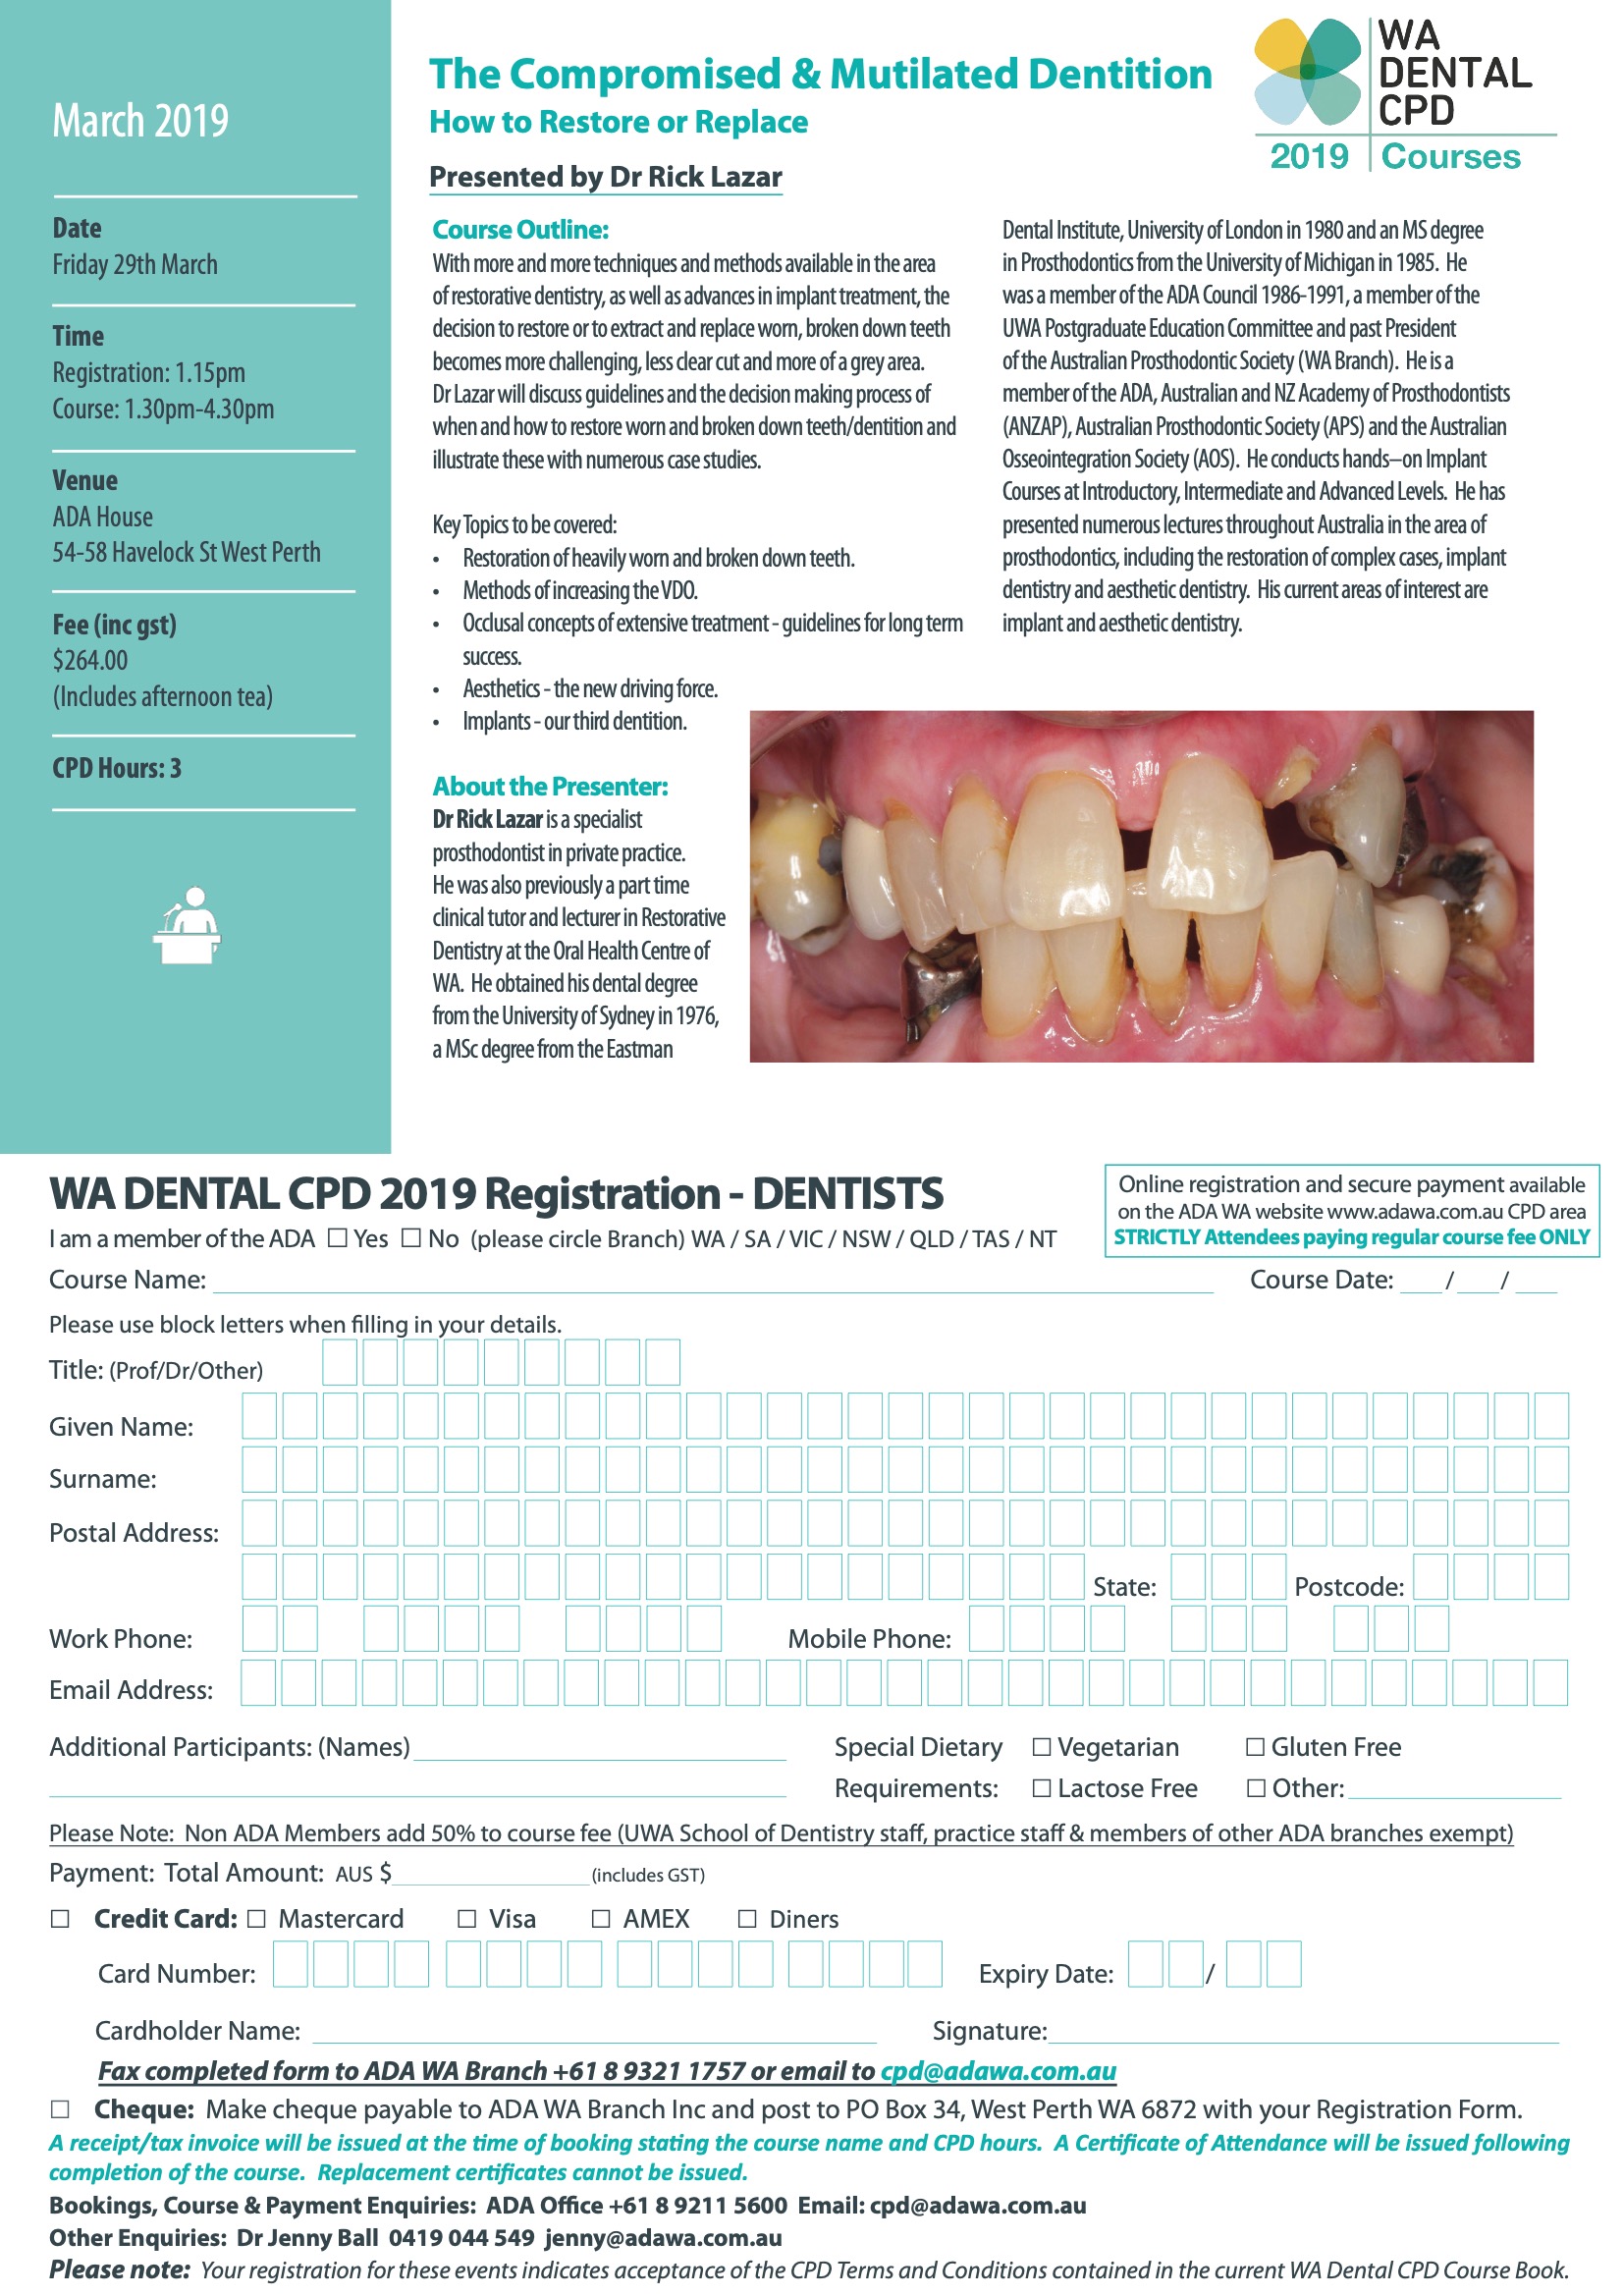 Australian-Dental-Association-Compromised-Mutilated-Dentition-2